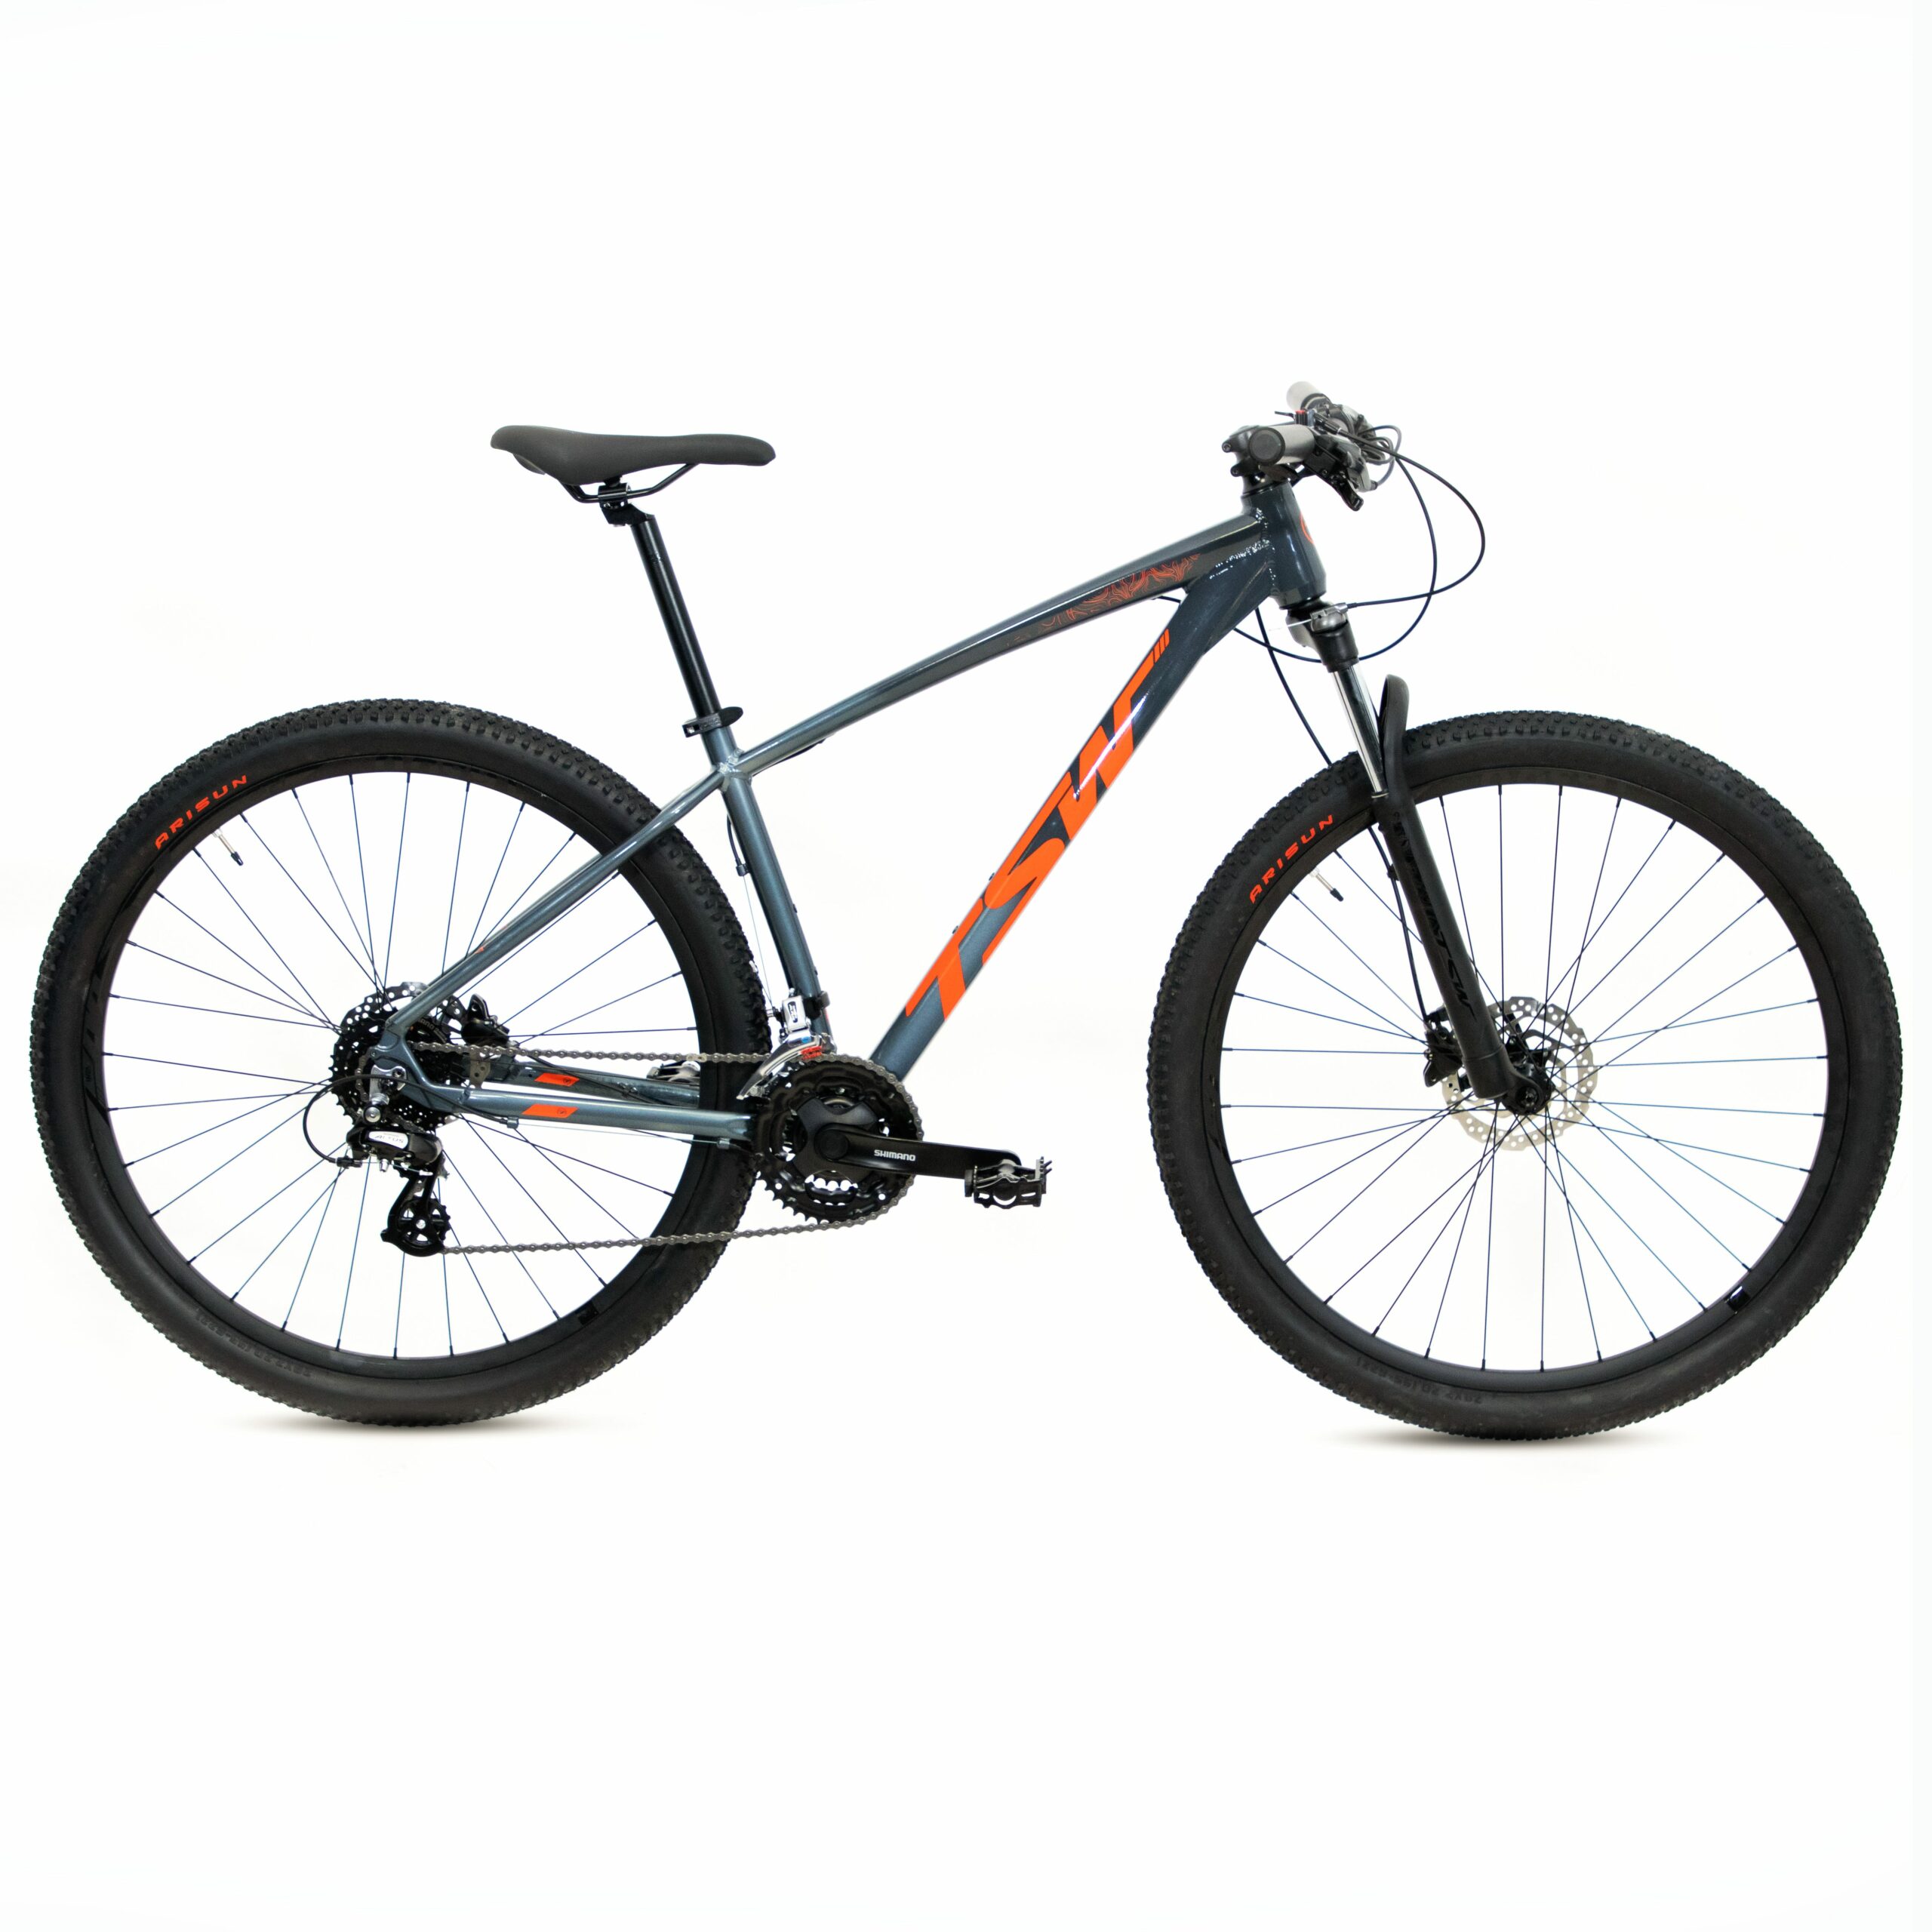 Bicicleta TSW Hunch | 2021/2022 - 15.5", Cinza/Vermelho